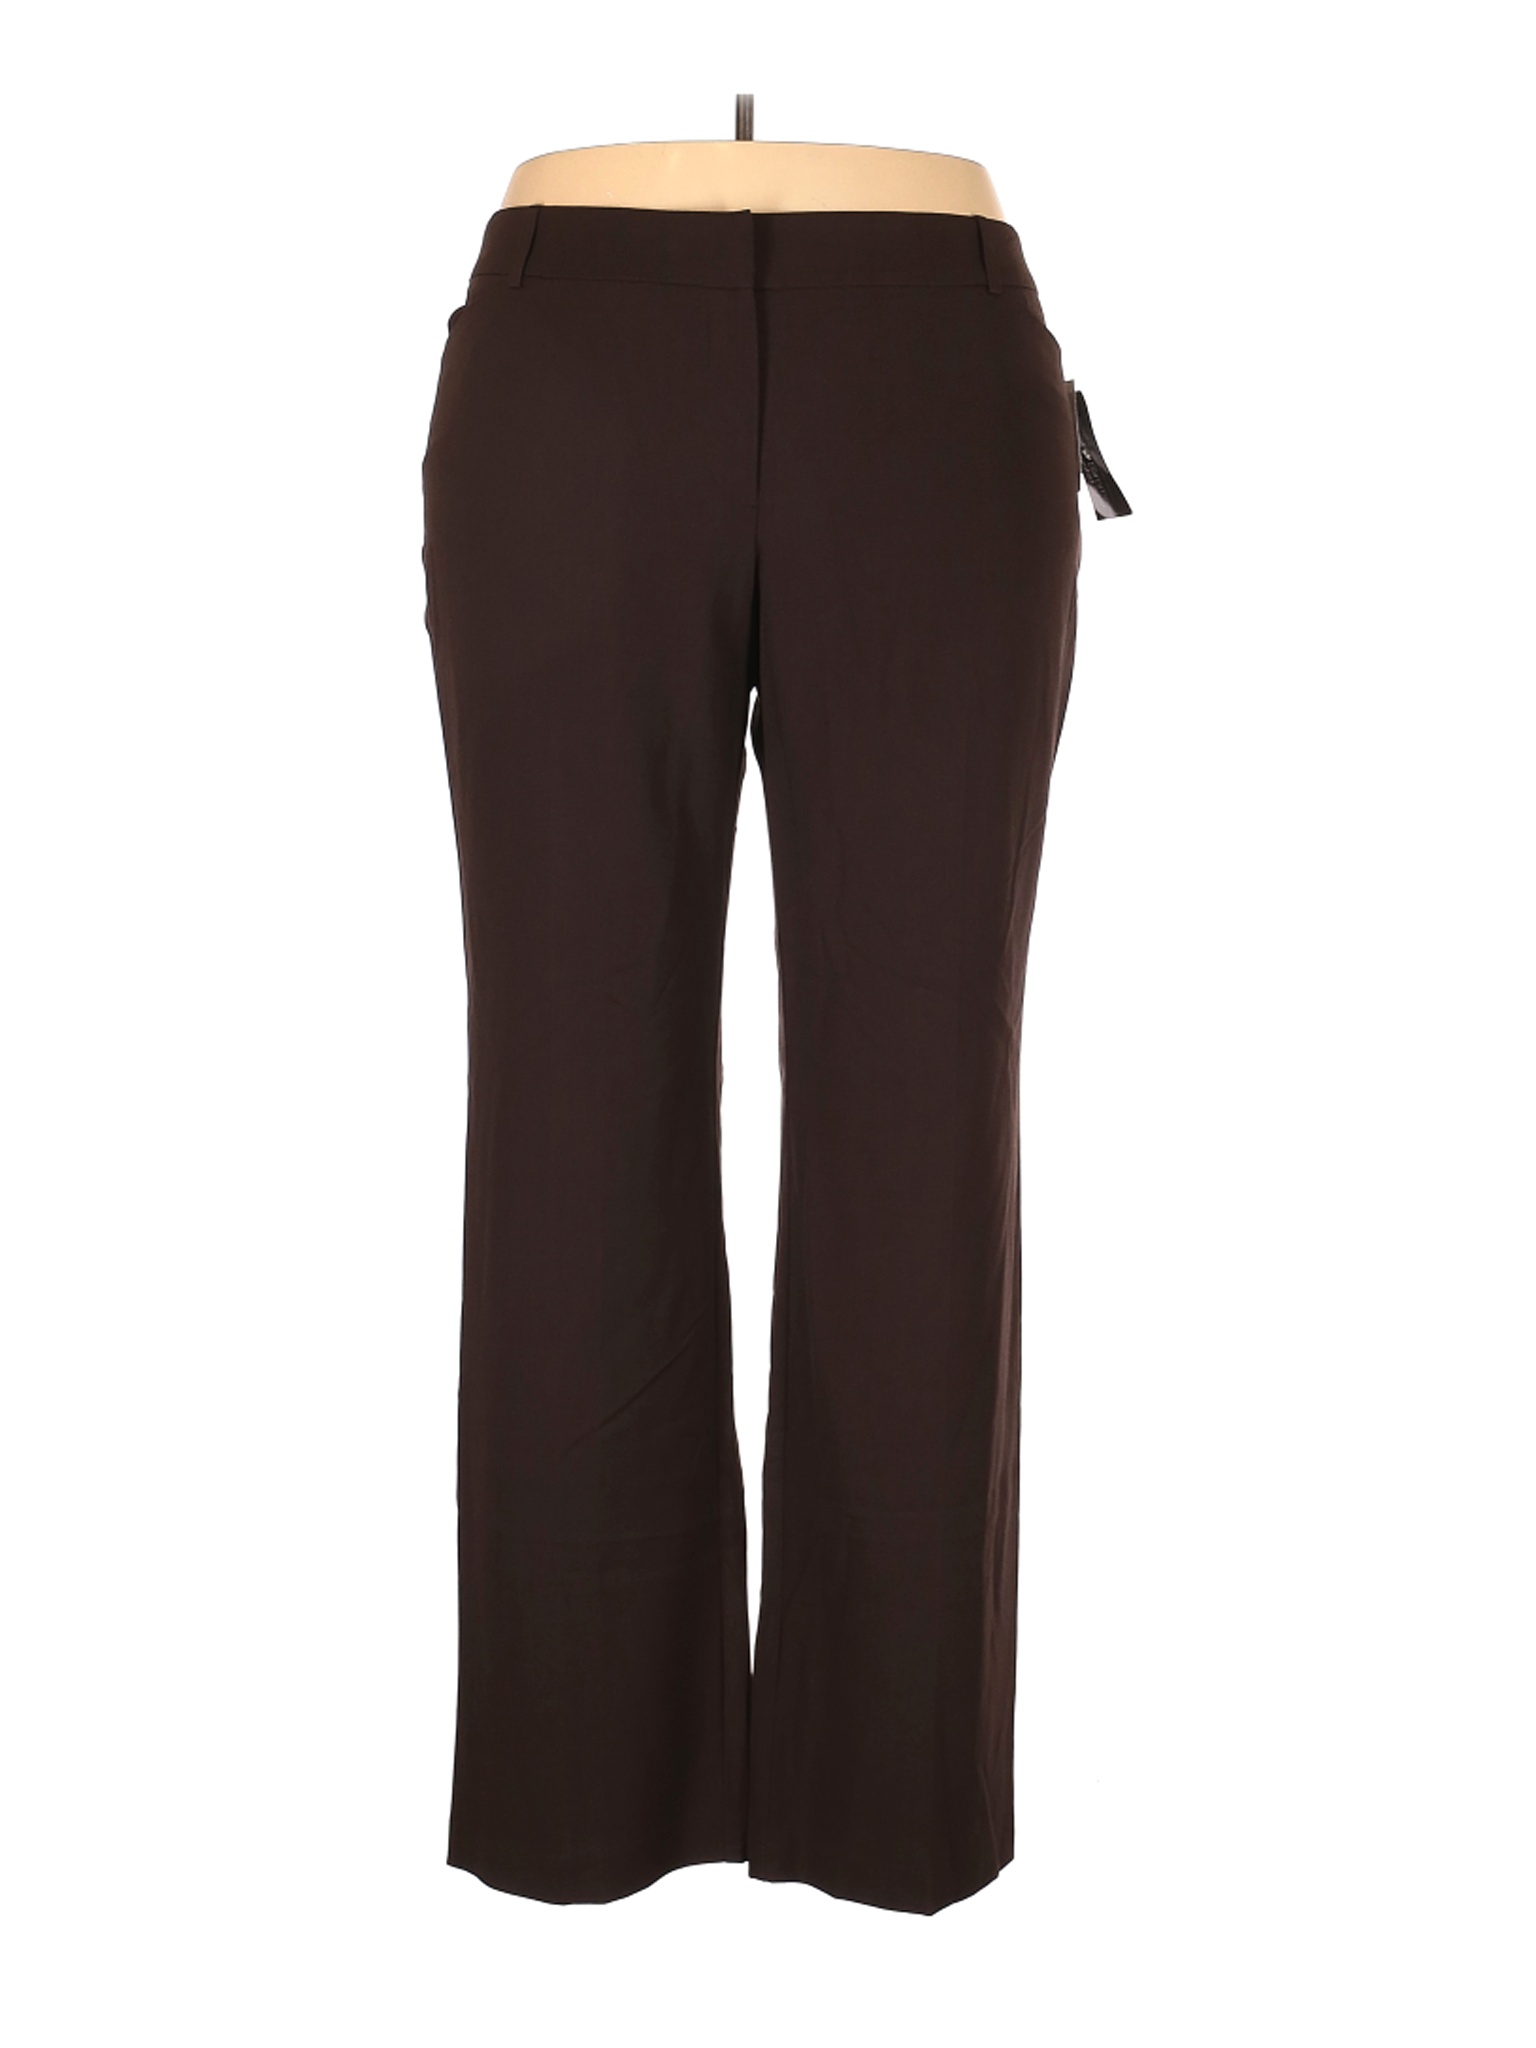 Fashion Bug Solid Brown Dress Pants Size 22 (Plus) - 24% off | thredUP